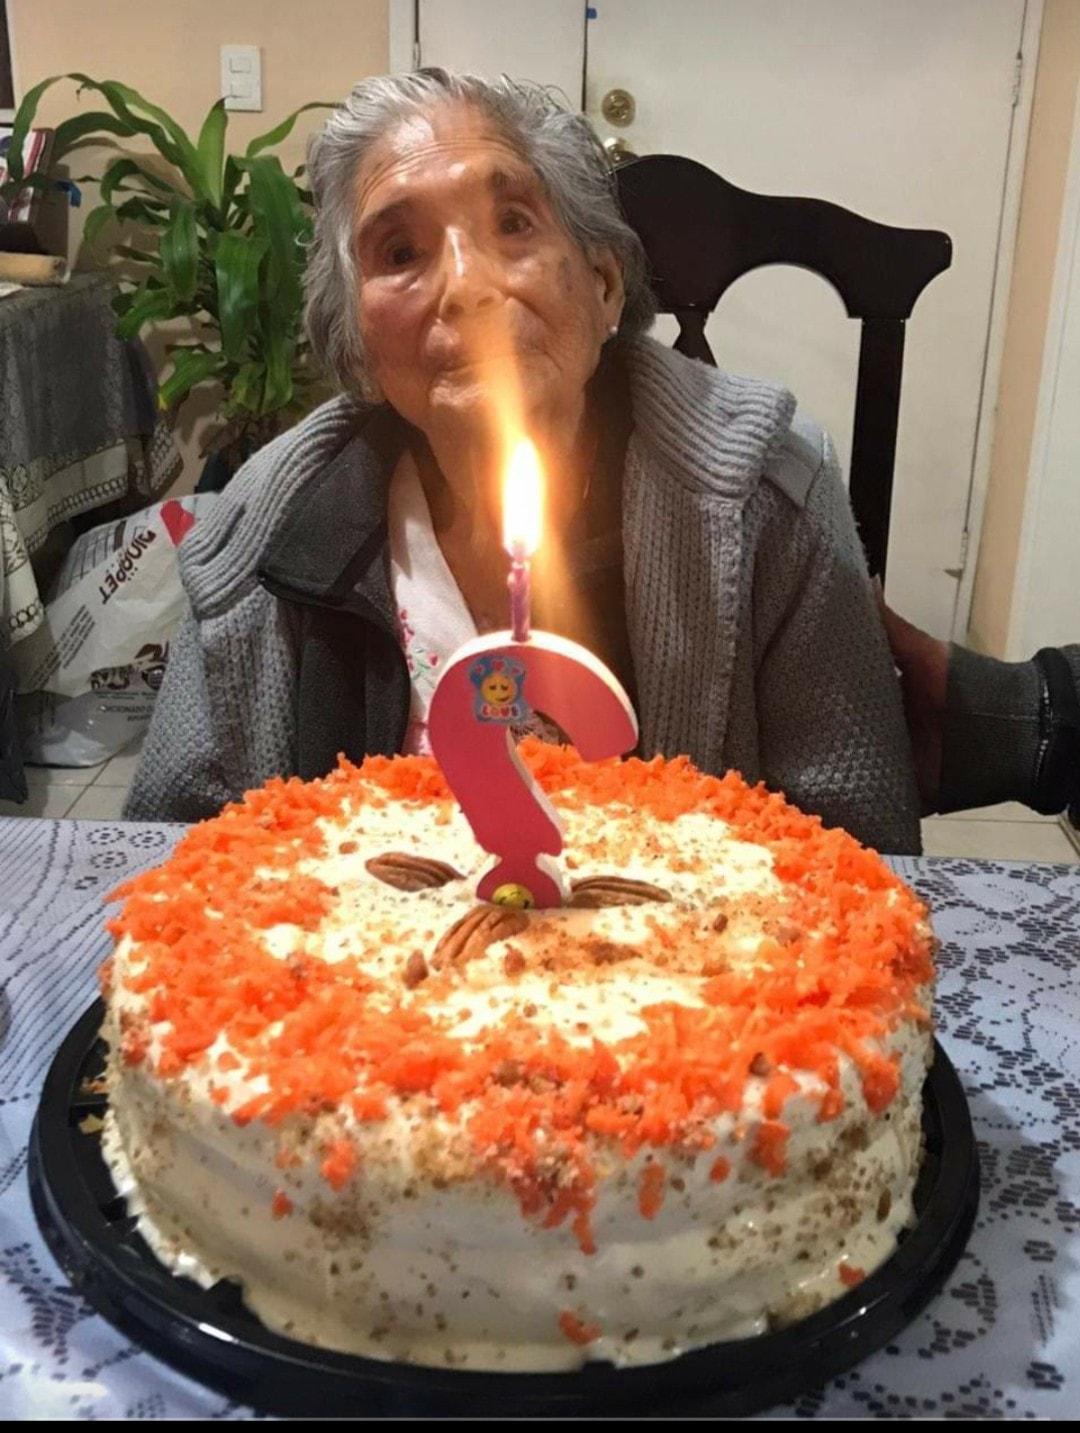 Celebrating her birthday, date unknown. (Source: Gerontology Wiki)